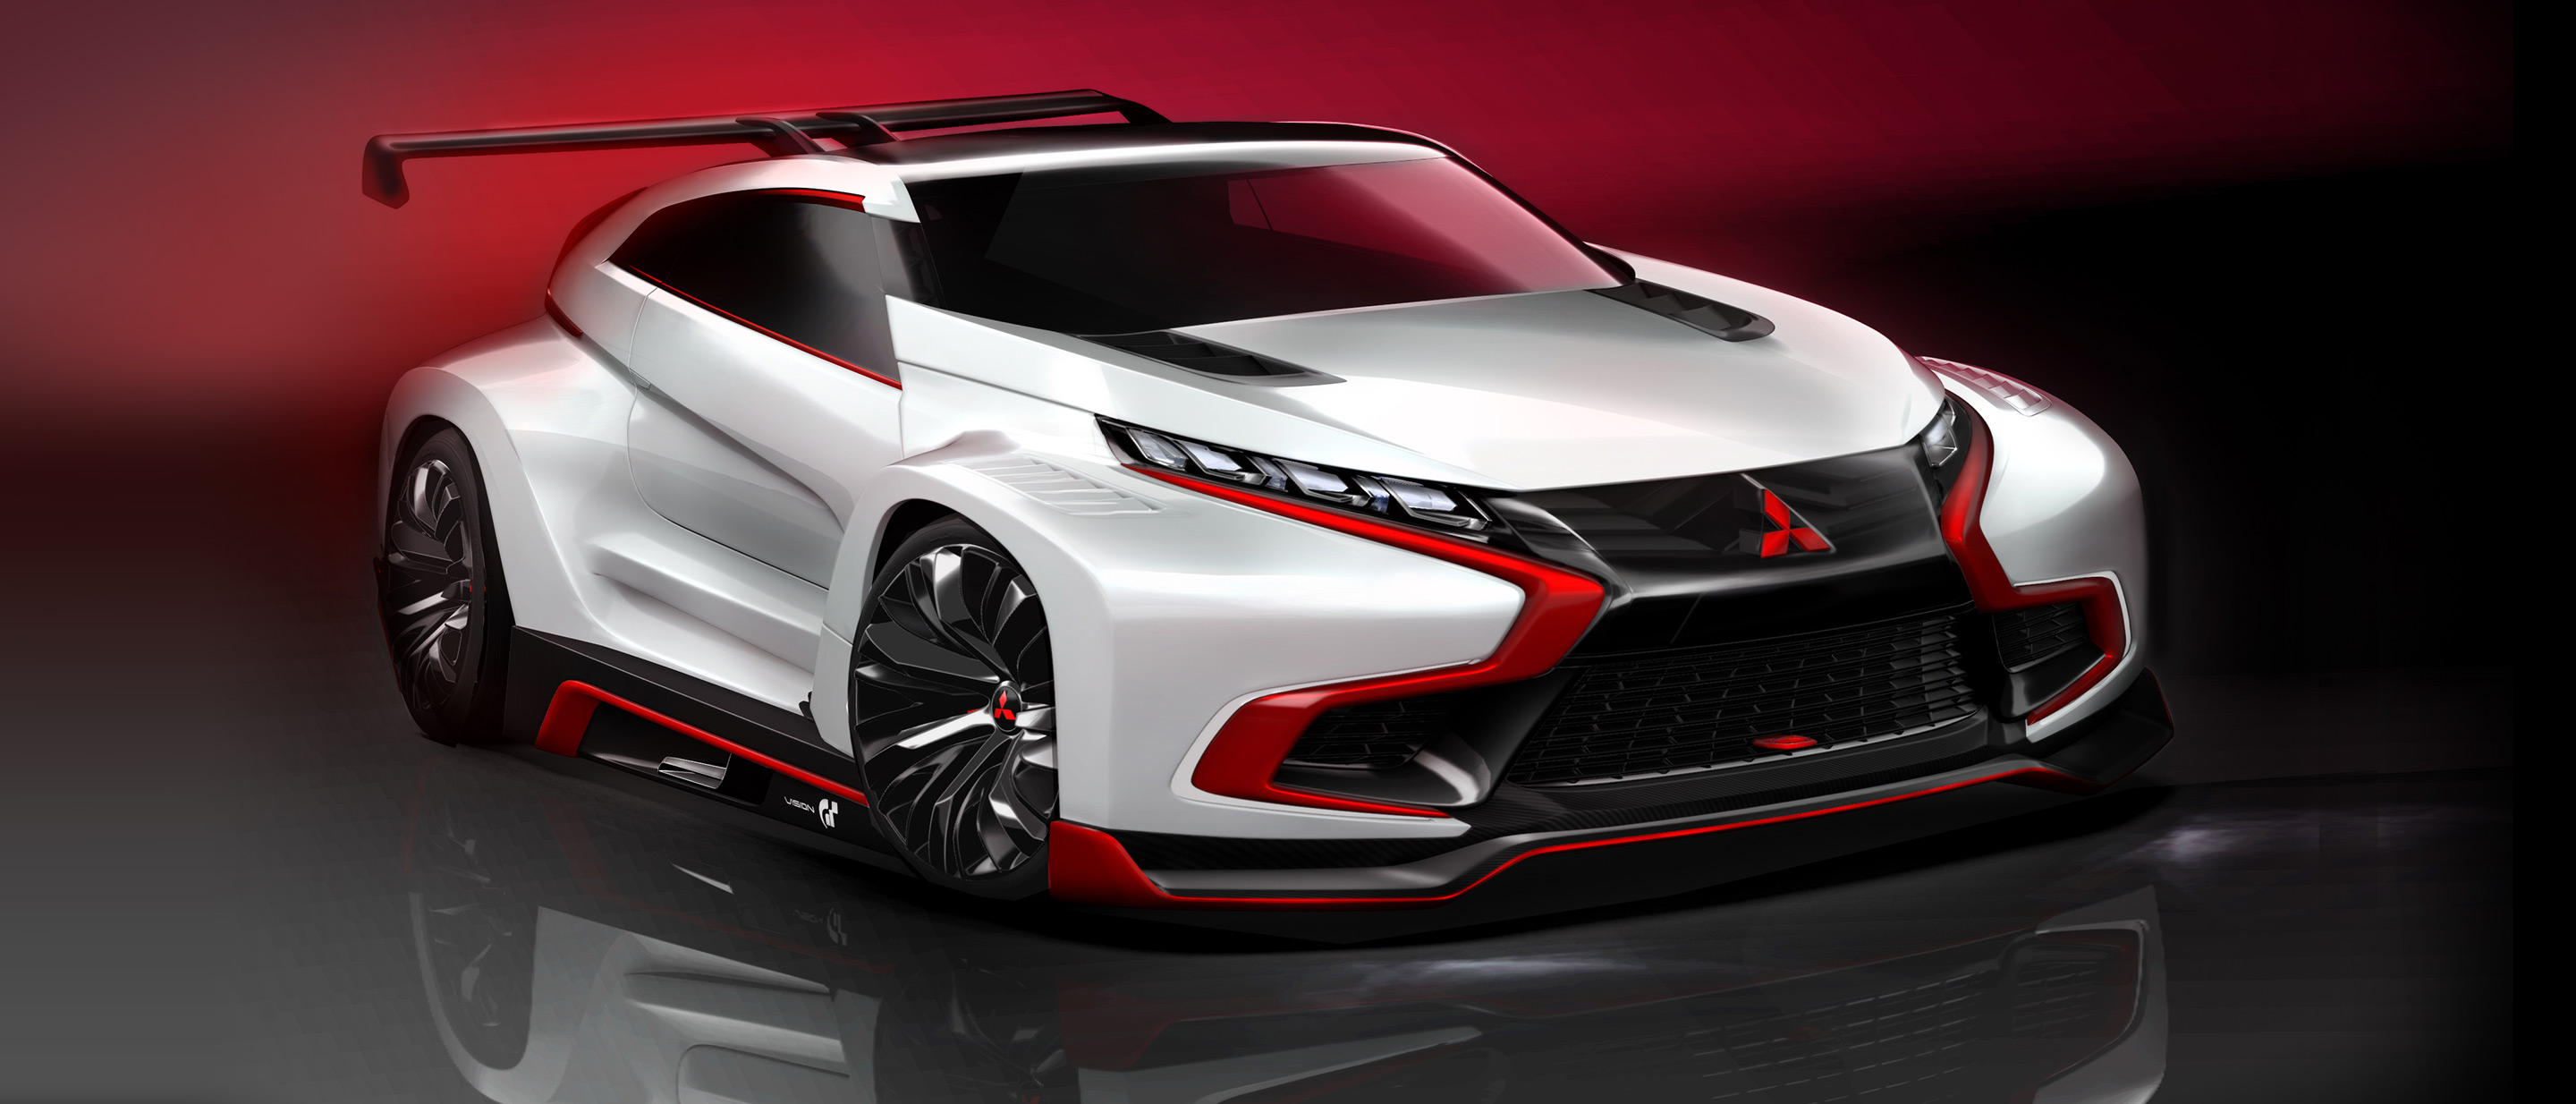 Mitsubishi Concept XR-PHEV EVOLUTION Vision Gran Turismo '14